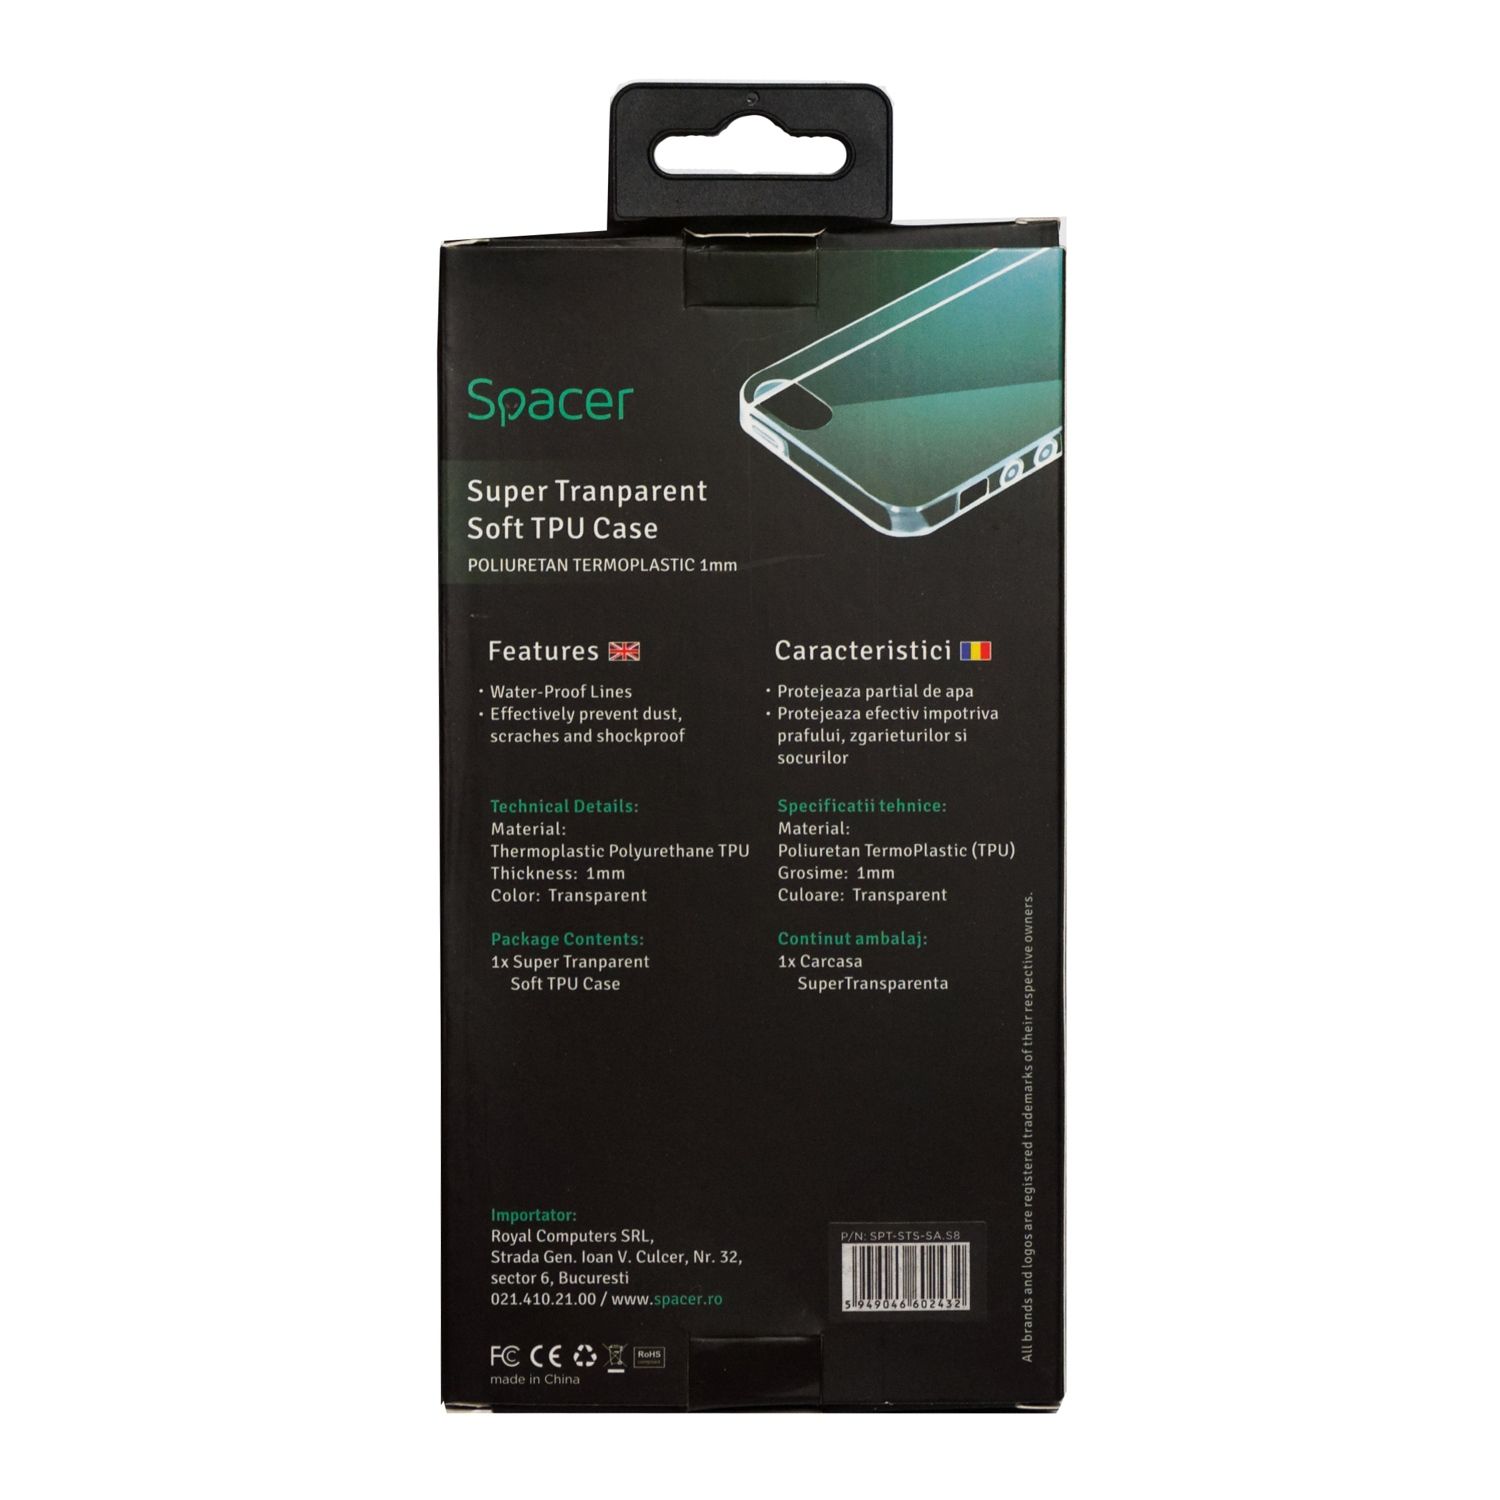 Husa telefon SuperTransparenta Spacer pentru Samsung S8, 